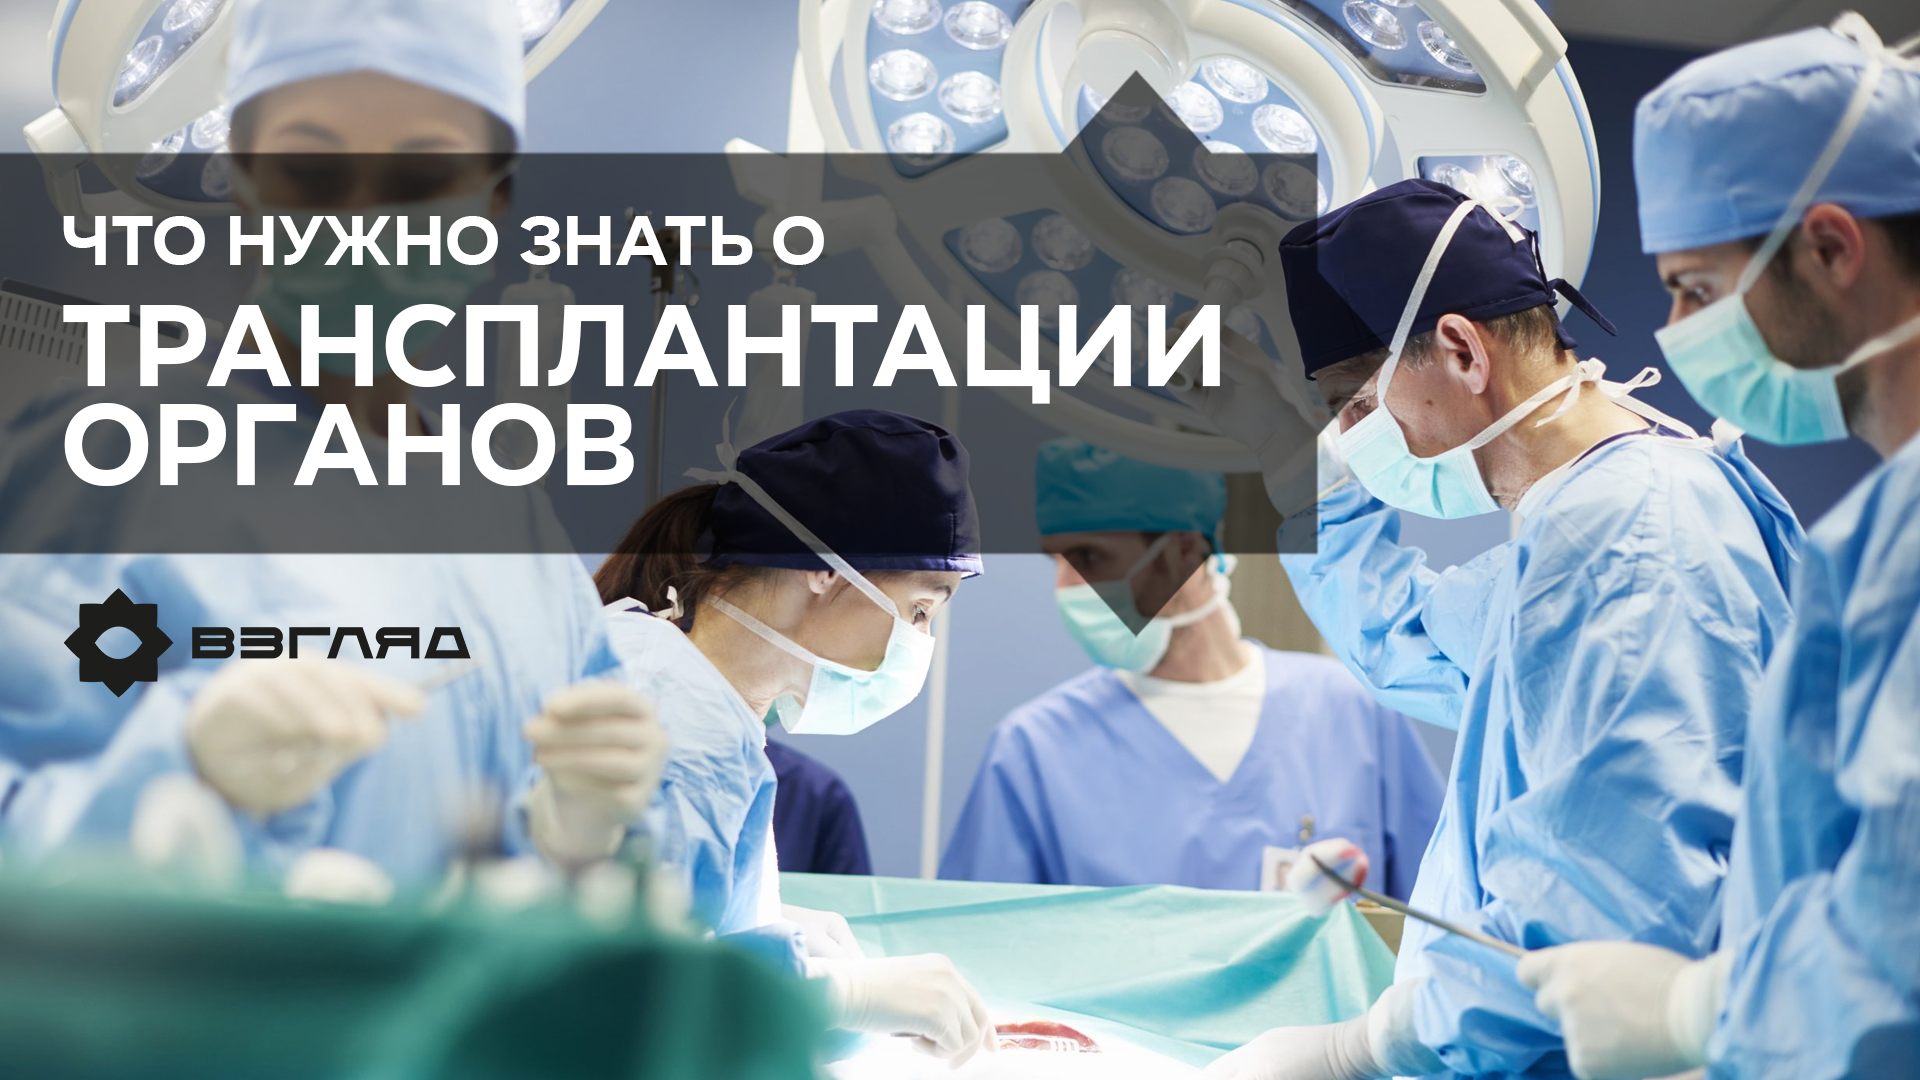 Презумпция согласия: в Узбекистане снимут ограничение на донорство органов и тканей человека